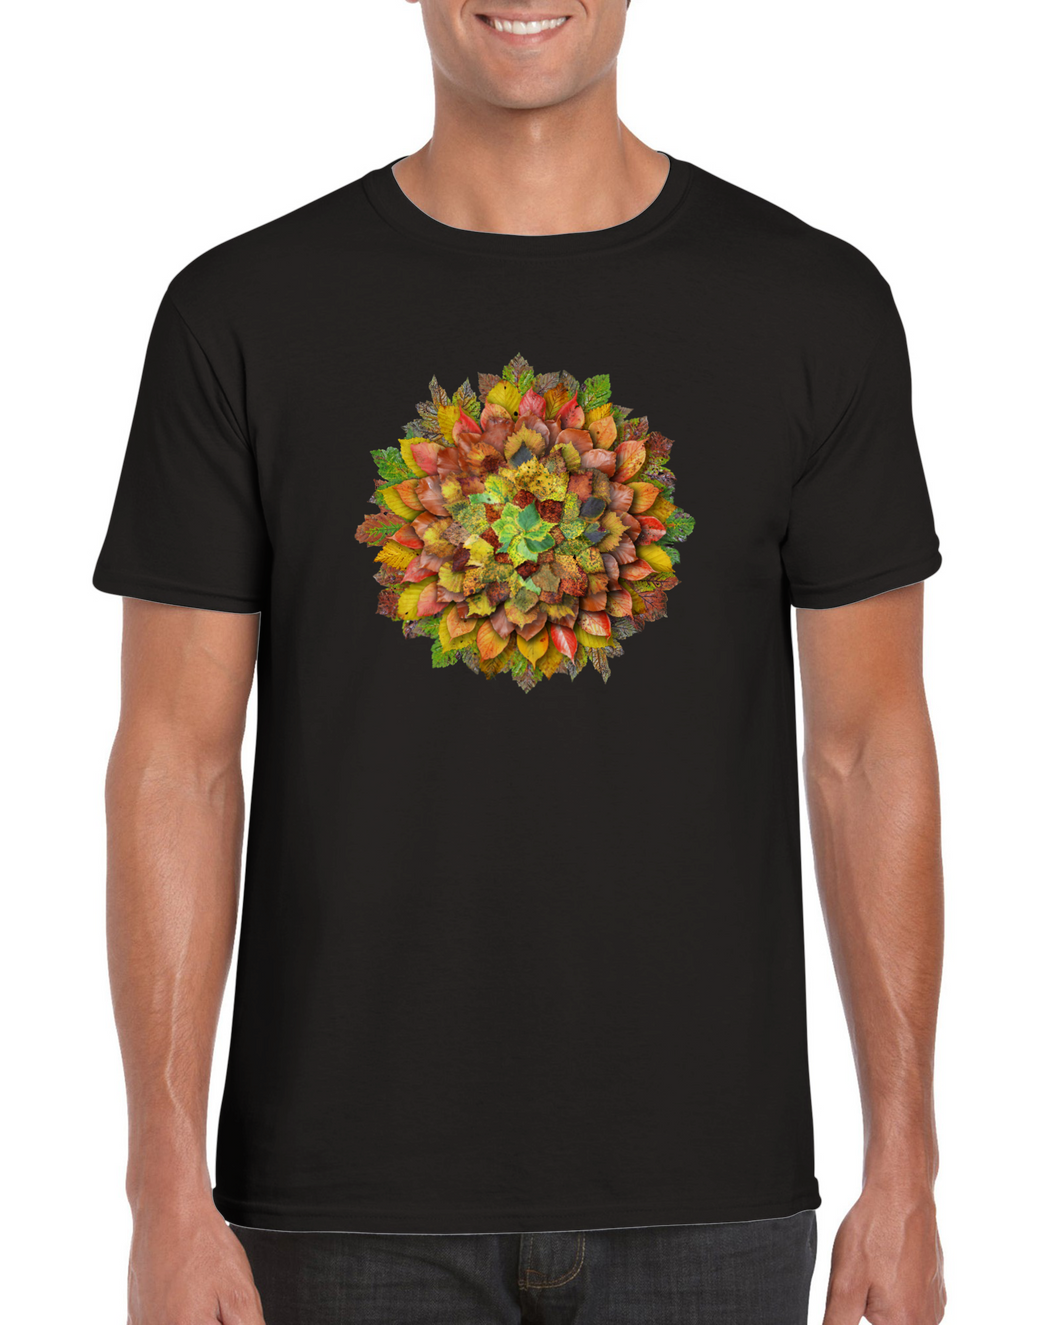 Autumn Leaves - Unisex  T-shirt